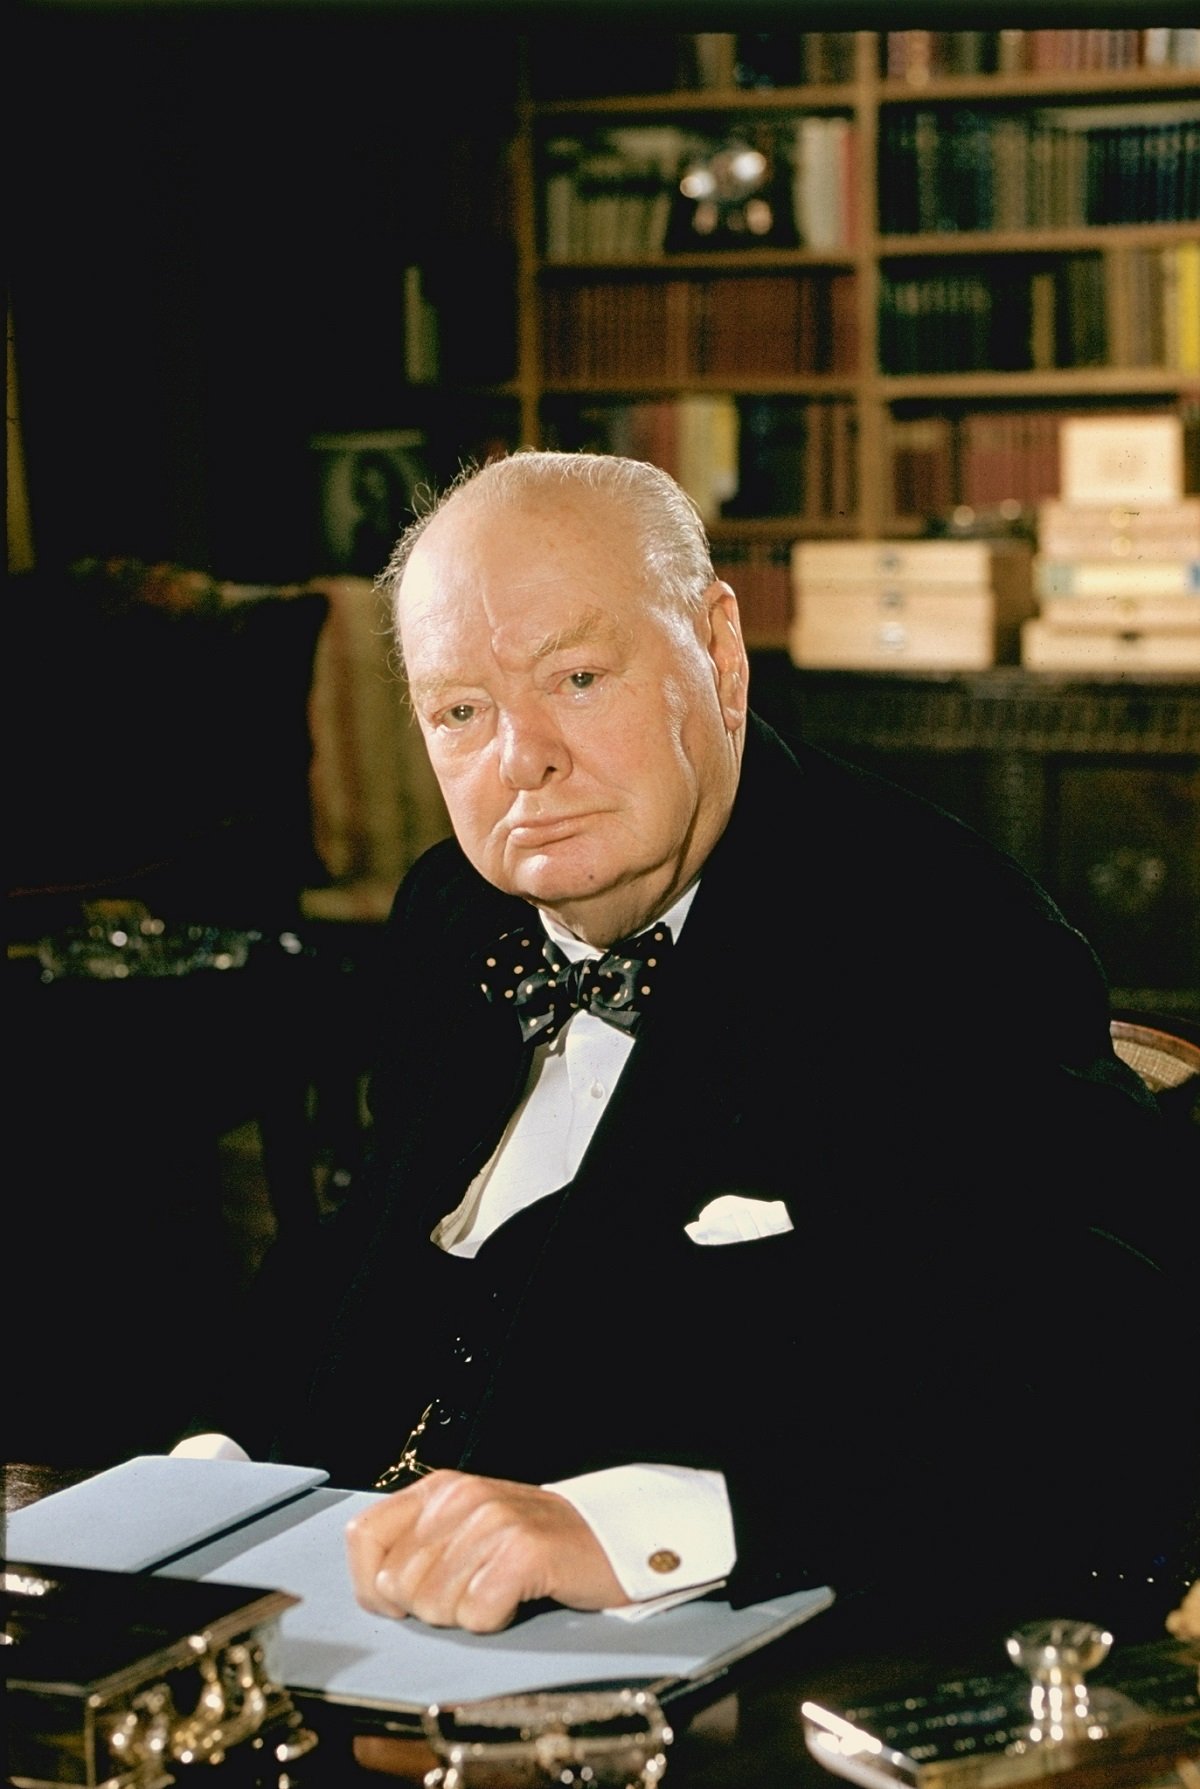 Formal portrait of Sir Winston Churchill at his desk